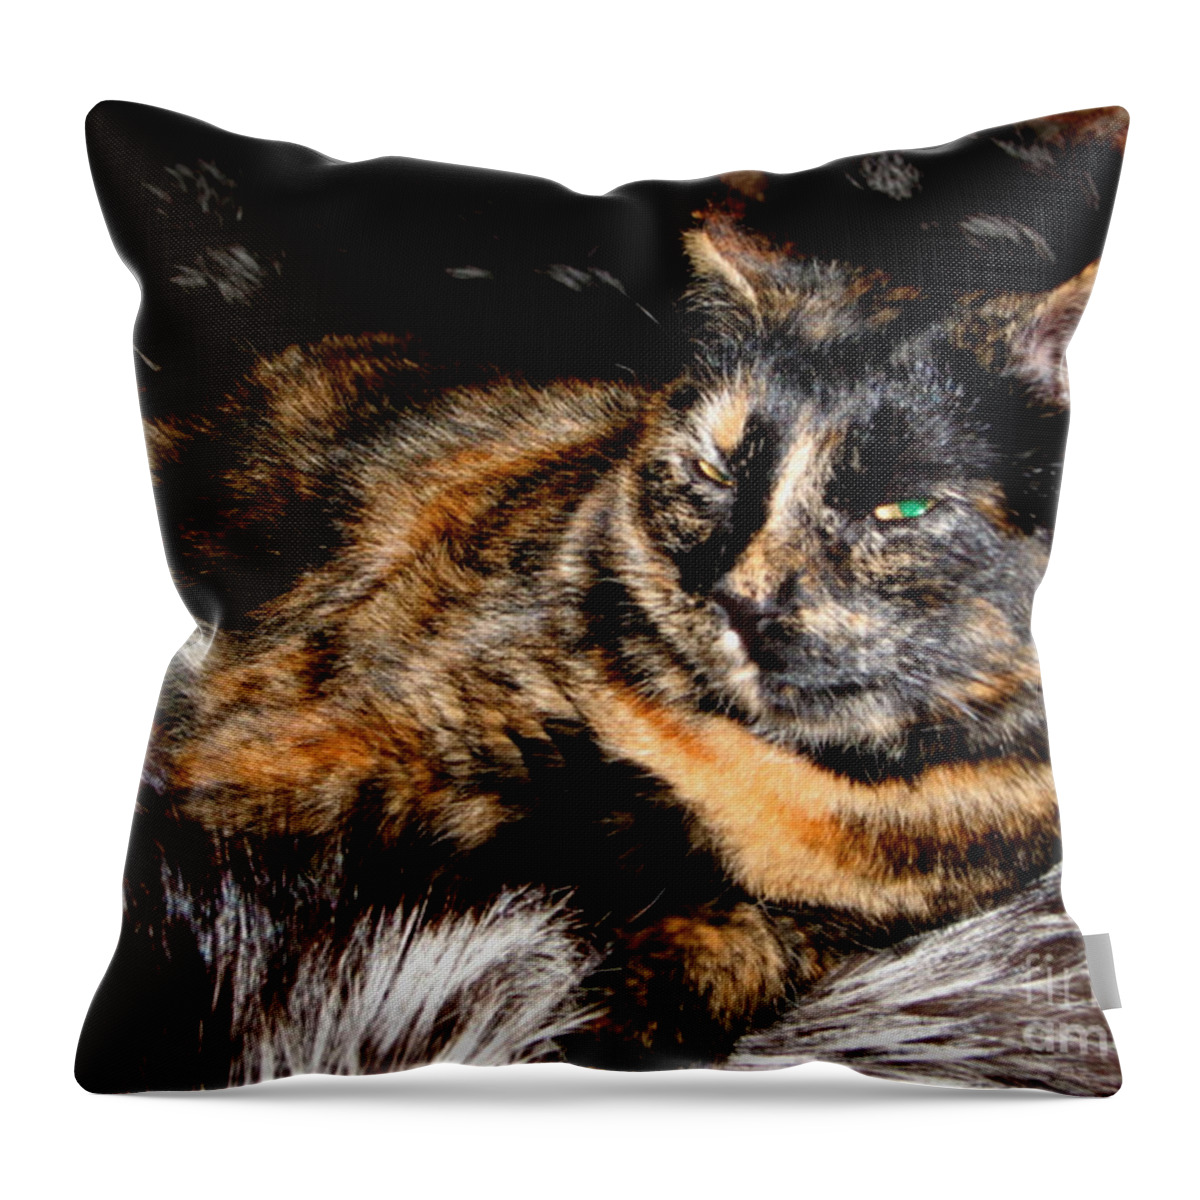  Throw Pillow featuring the digital art Fancy Cat by Oksana Semenchenko